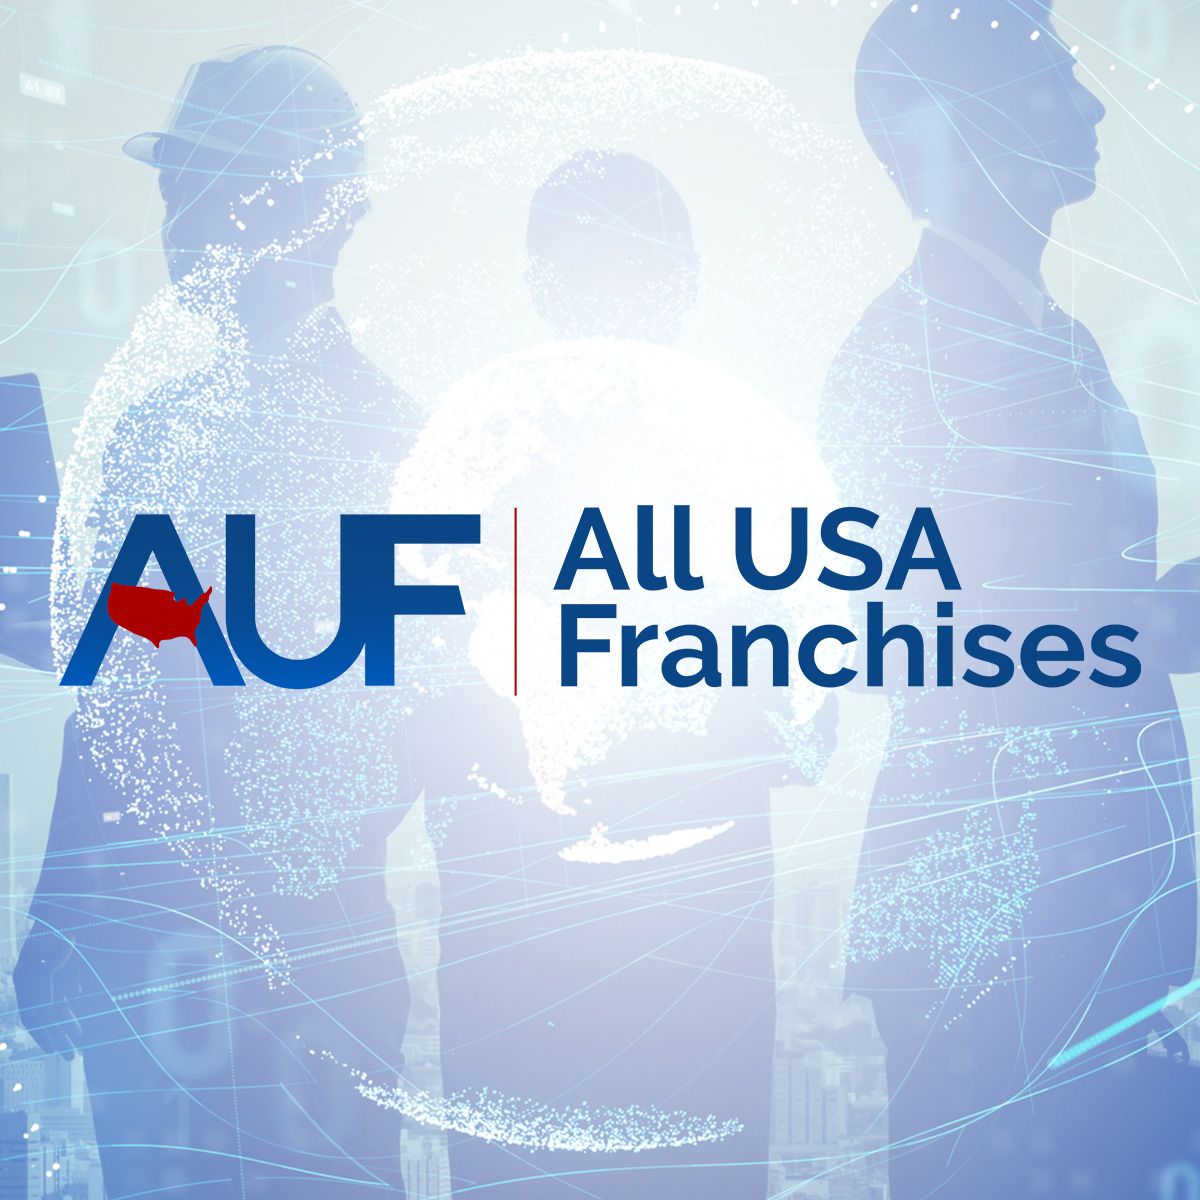 All USA Franchises, America's Leading Franchise Portal for Investors and Entrepreneurs, Refreshes Its Logo